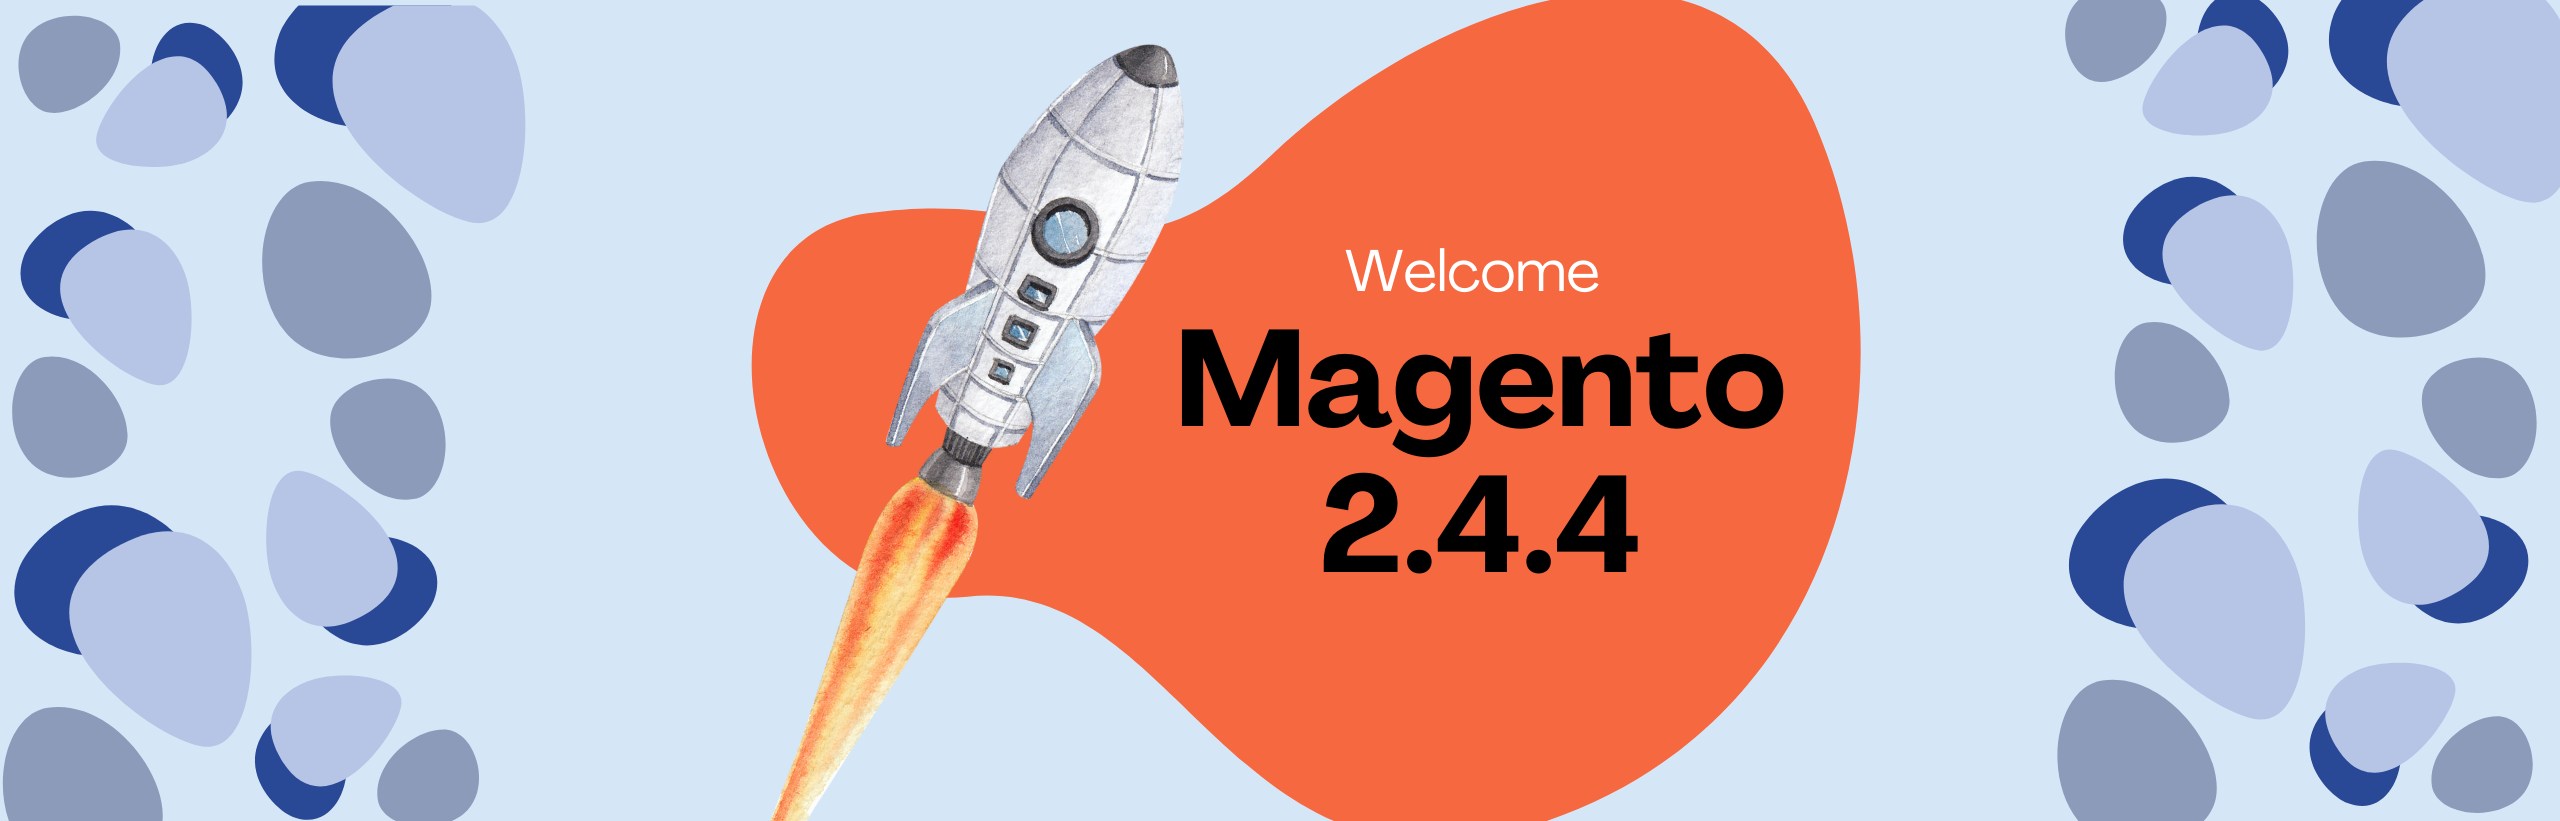 Magento 2.4.4 Upgrade: Know How to Upgrade your Magento Store